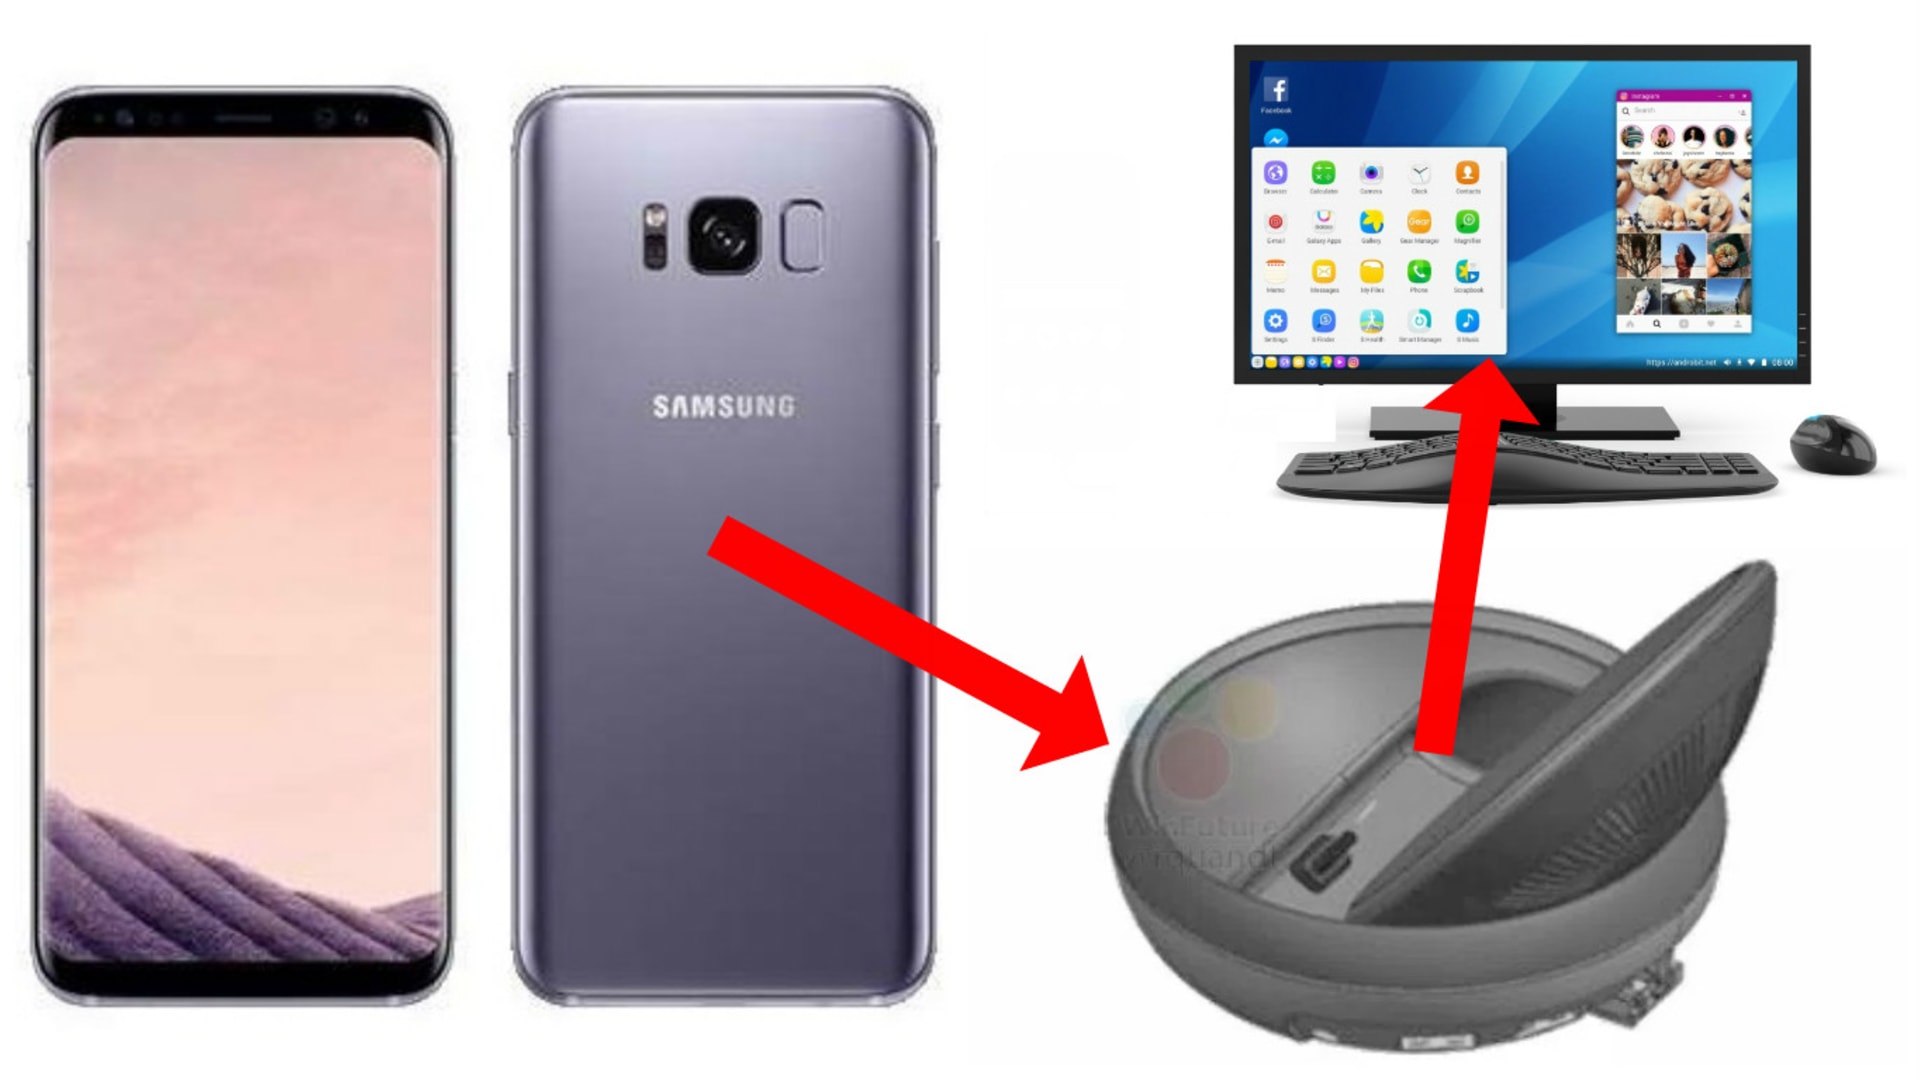 Dokovací stanice DeX má povýšit Samsung Galaxy S8 na počítač.